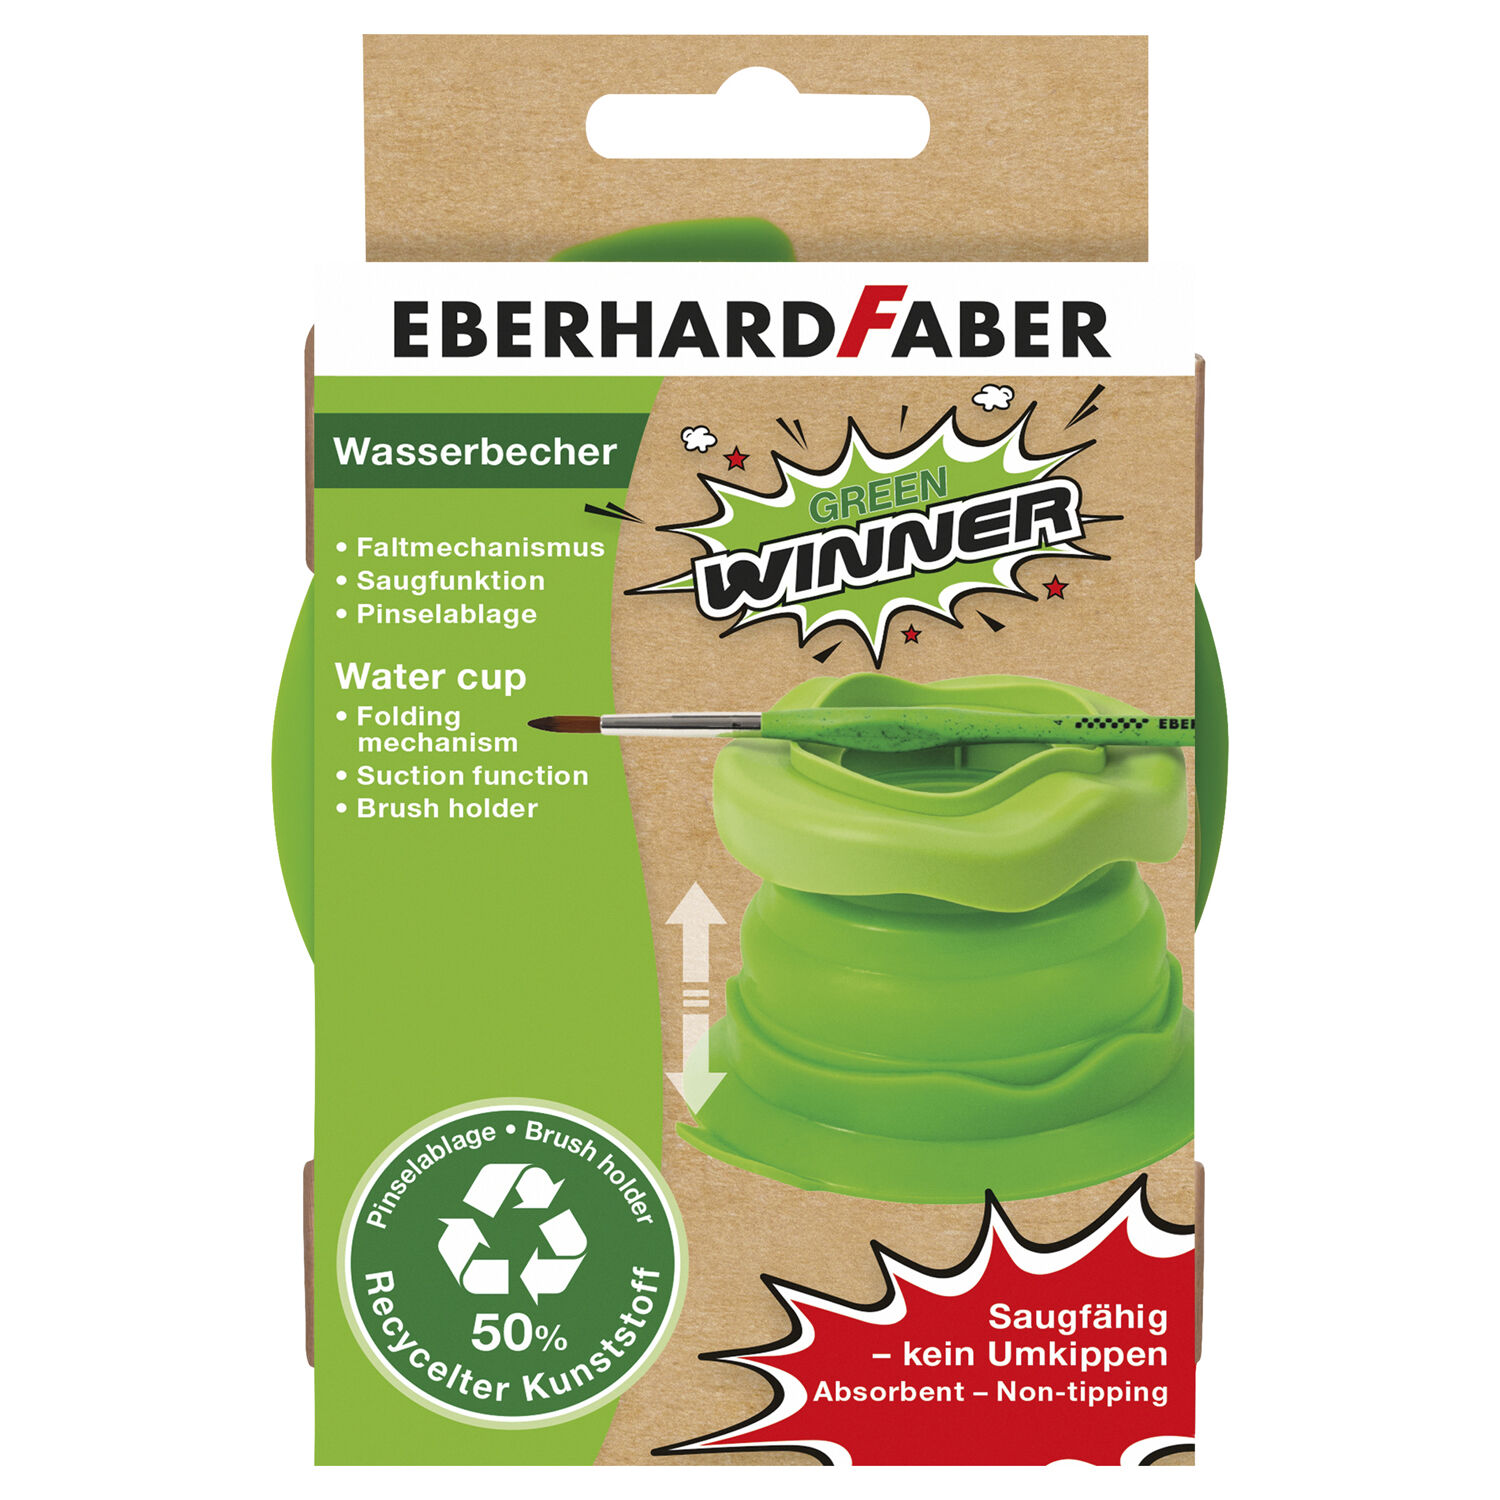 NEU EberhardFaber Green Winner, Wasserbecher faltbar mit Saugnapf